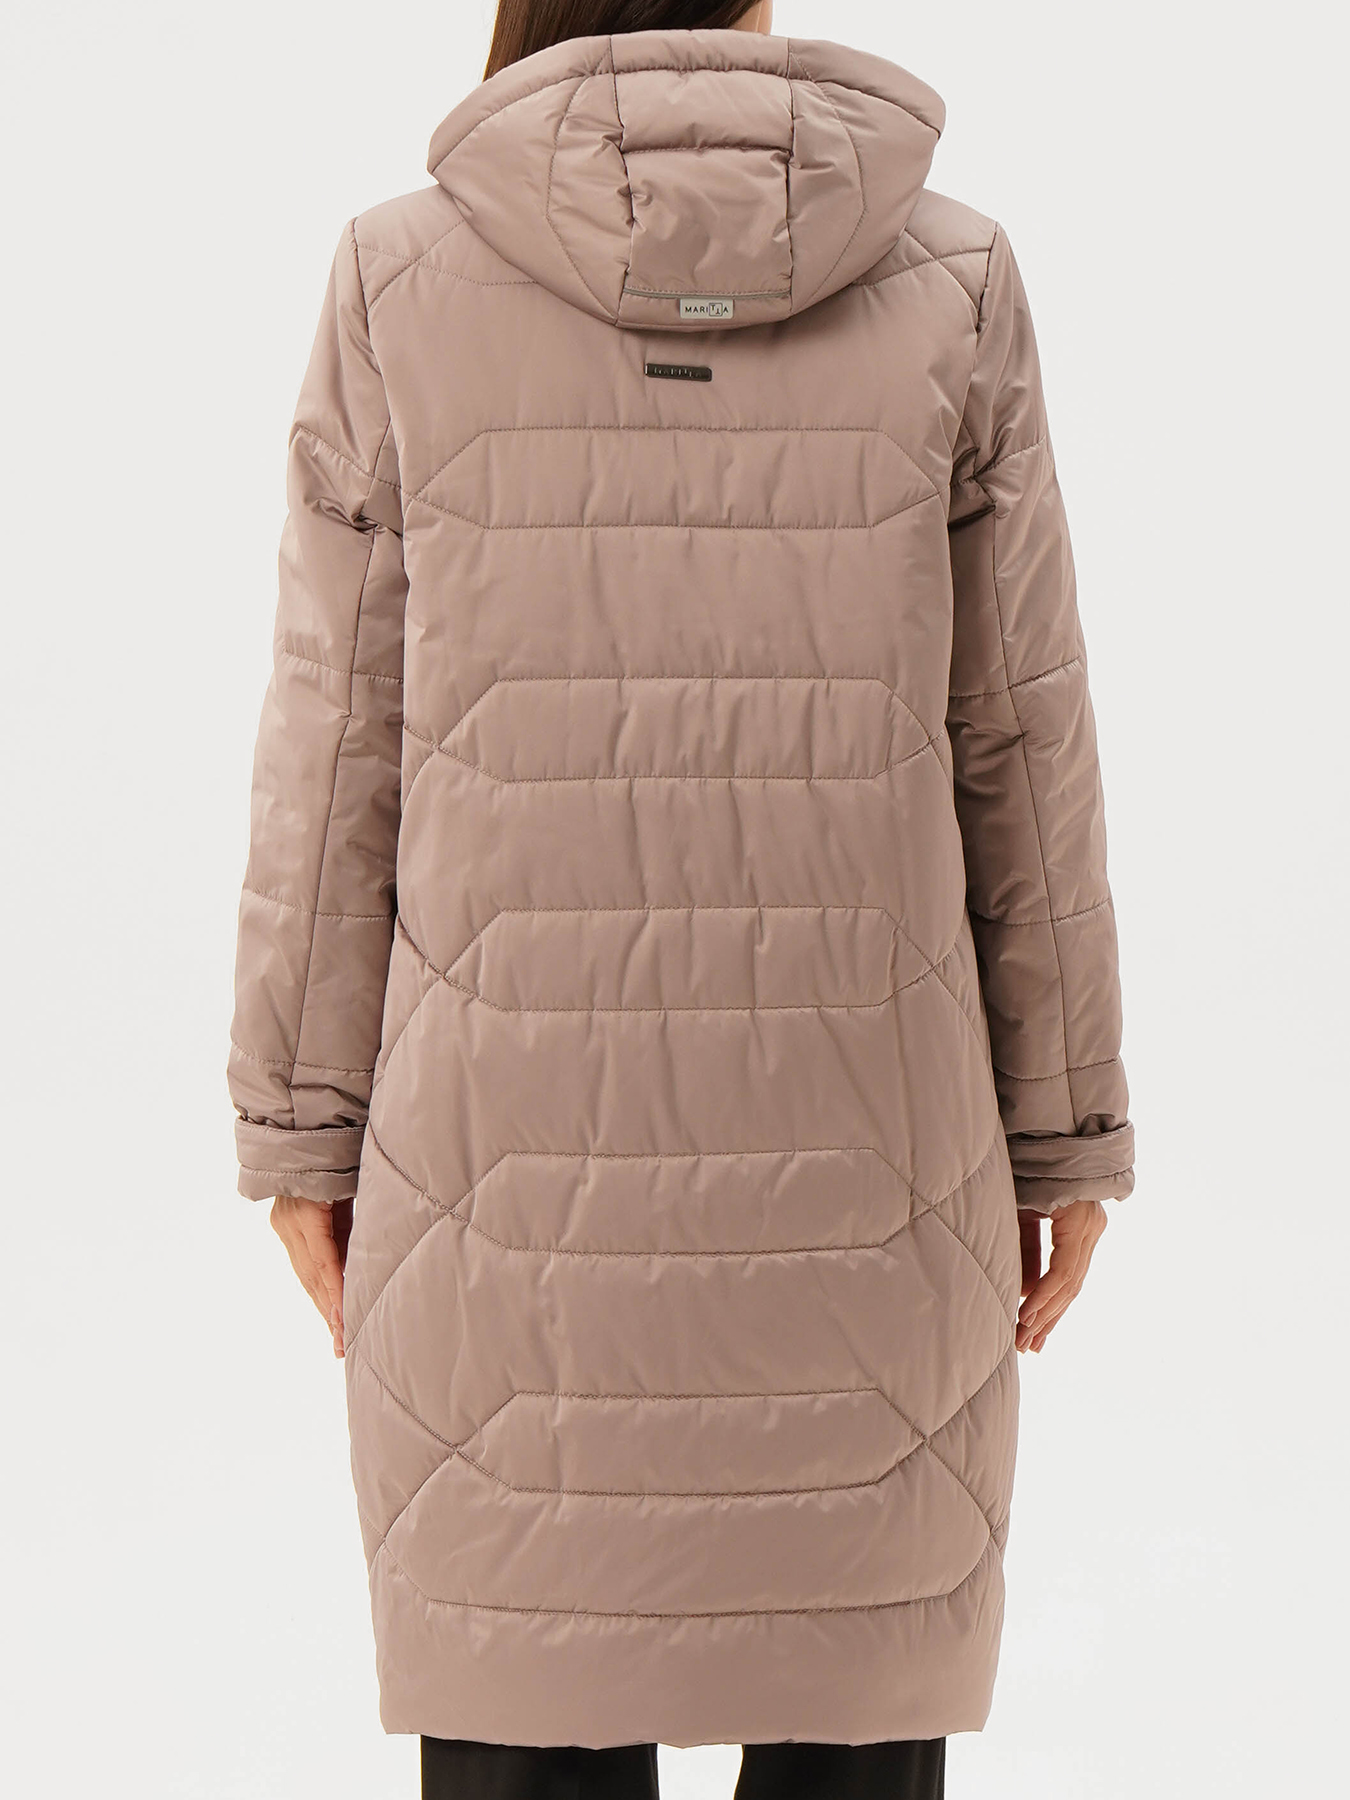 Пальто зимнее Maritta 433520-025, цвет бежевый, размер 48 - фото 6